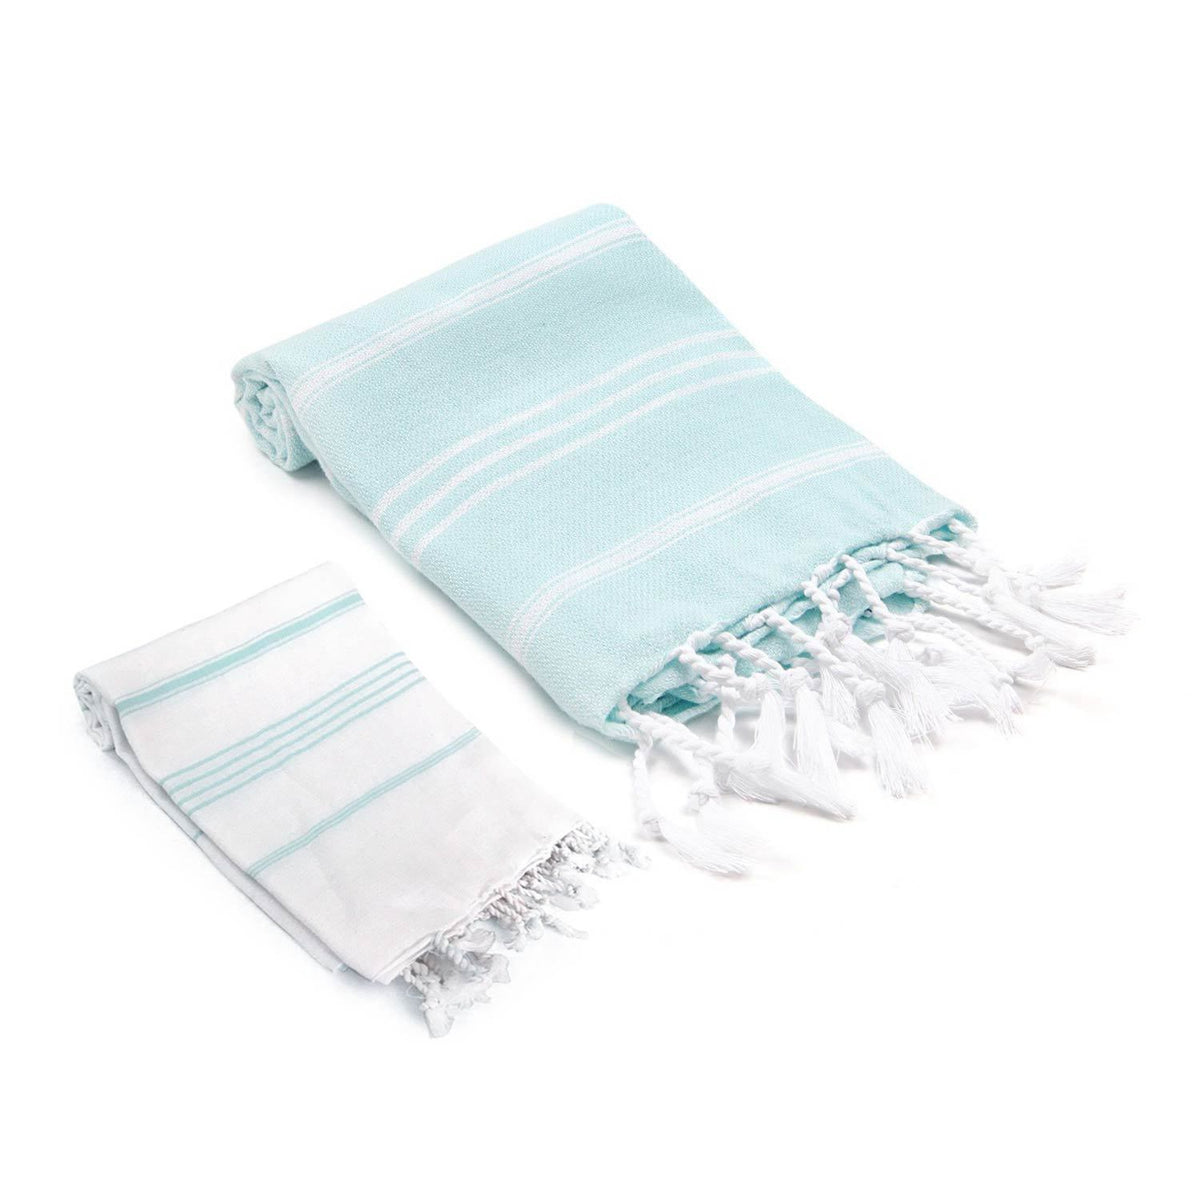 Bodrum / Datca Turkish Towel Set